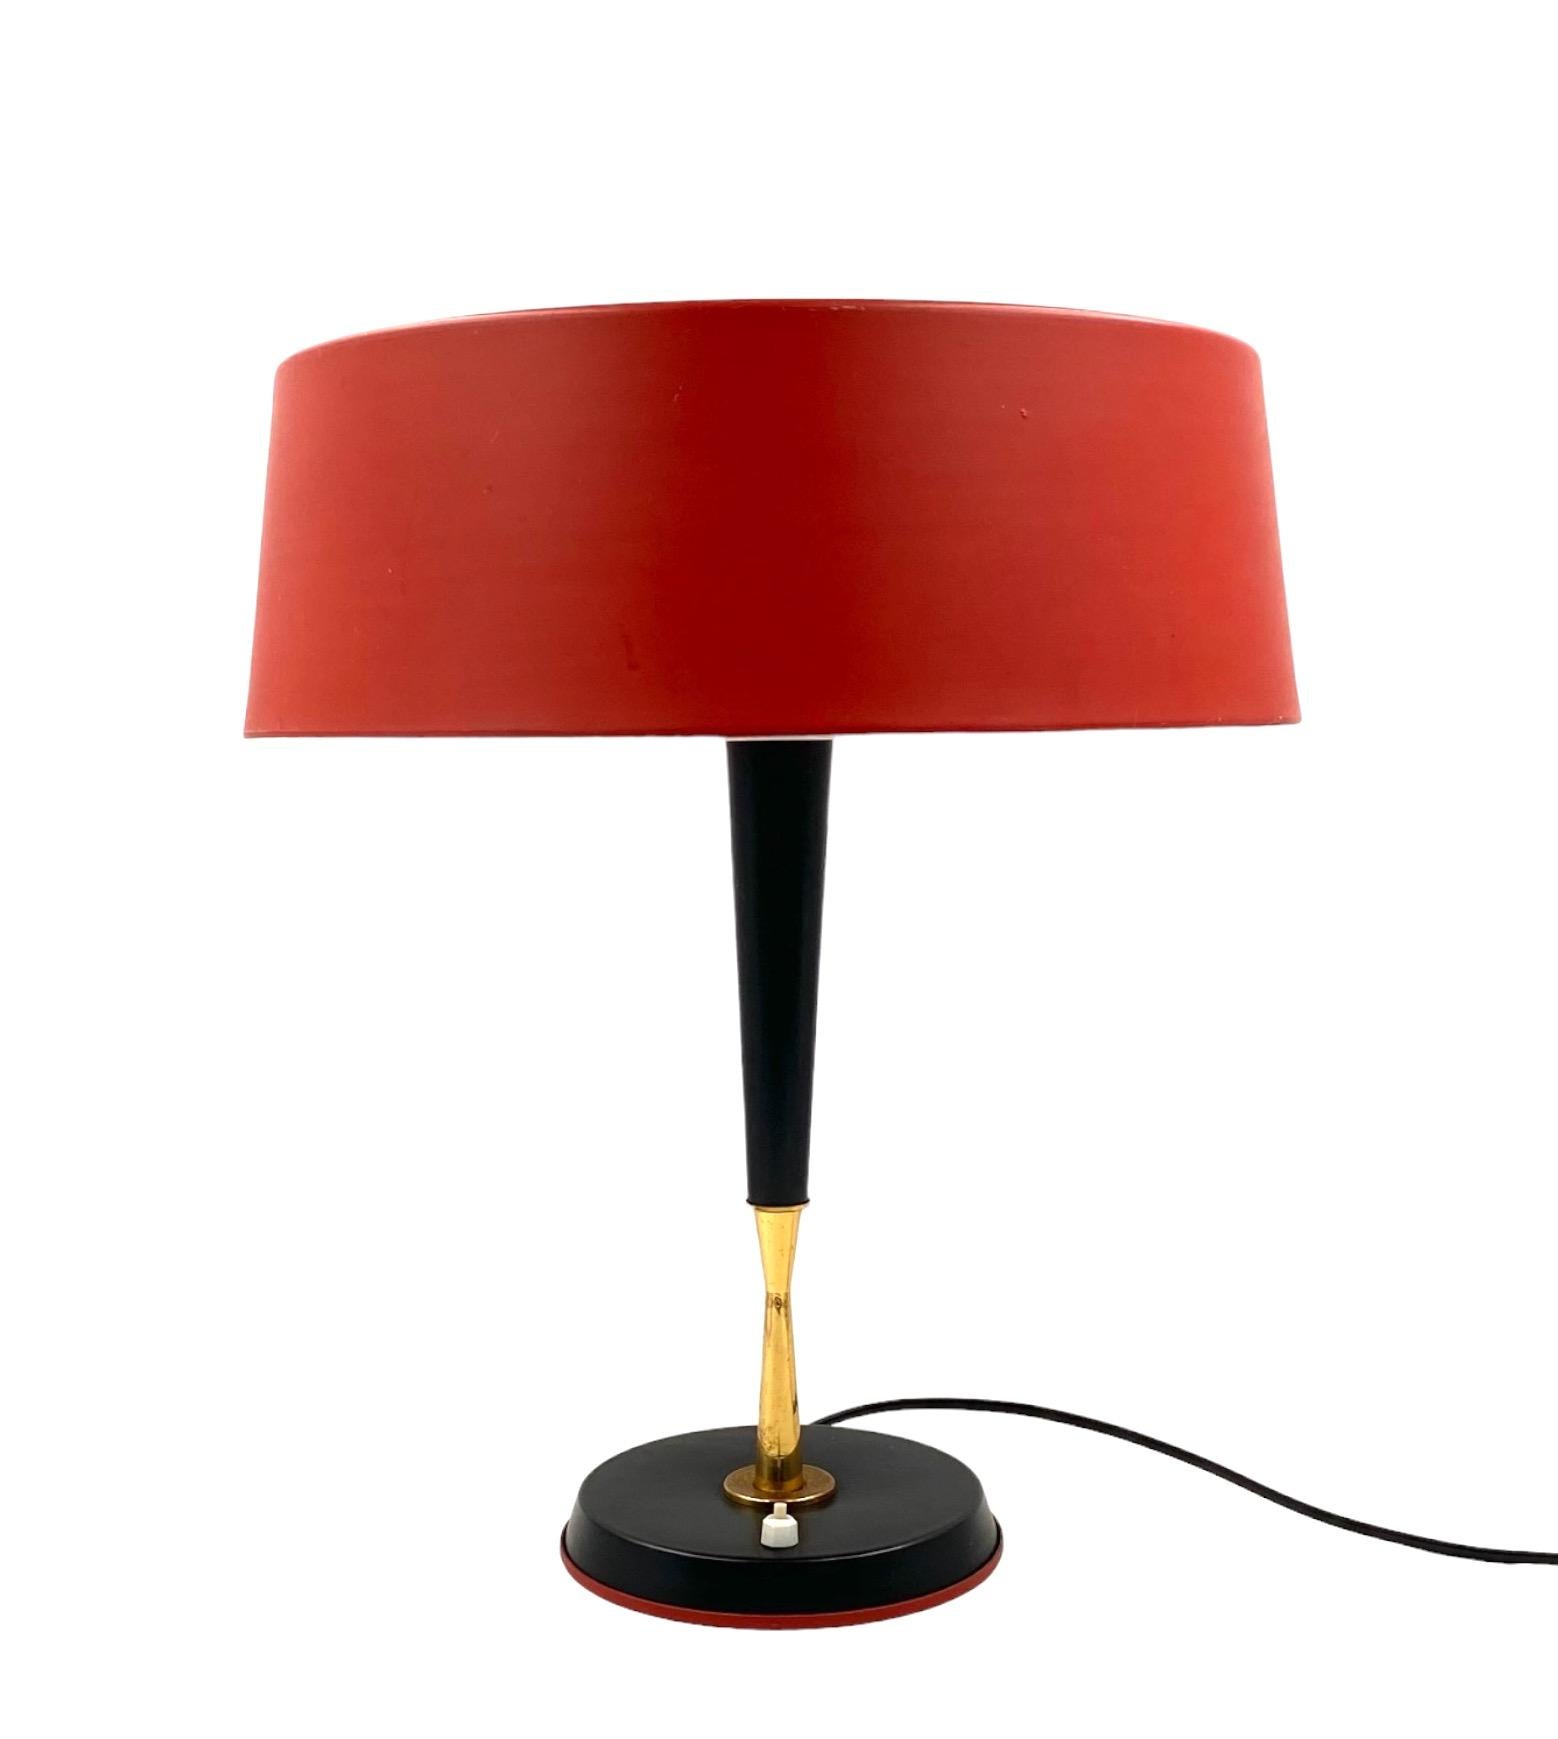 Aluminium Oscar Torlasco, lampe de table rouge du milieu du siècle, Lumi, Italie 1954 en vente